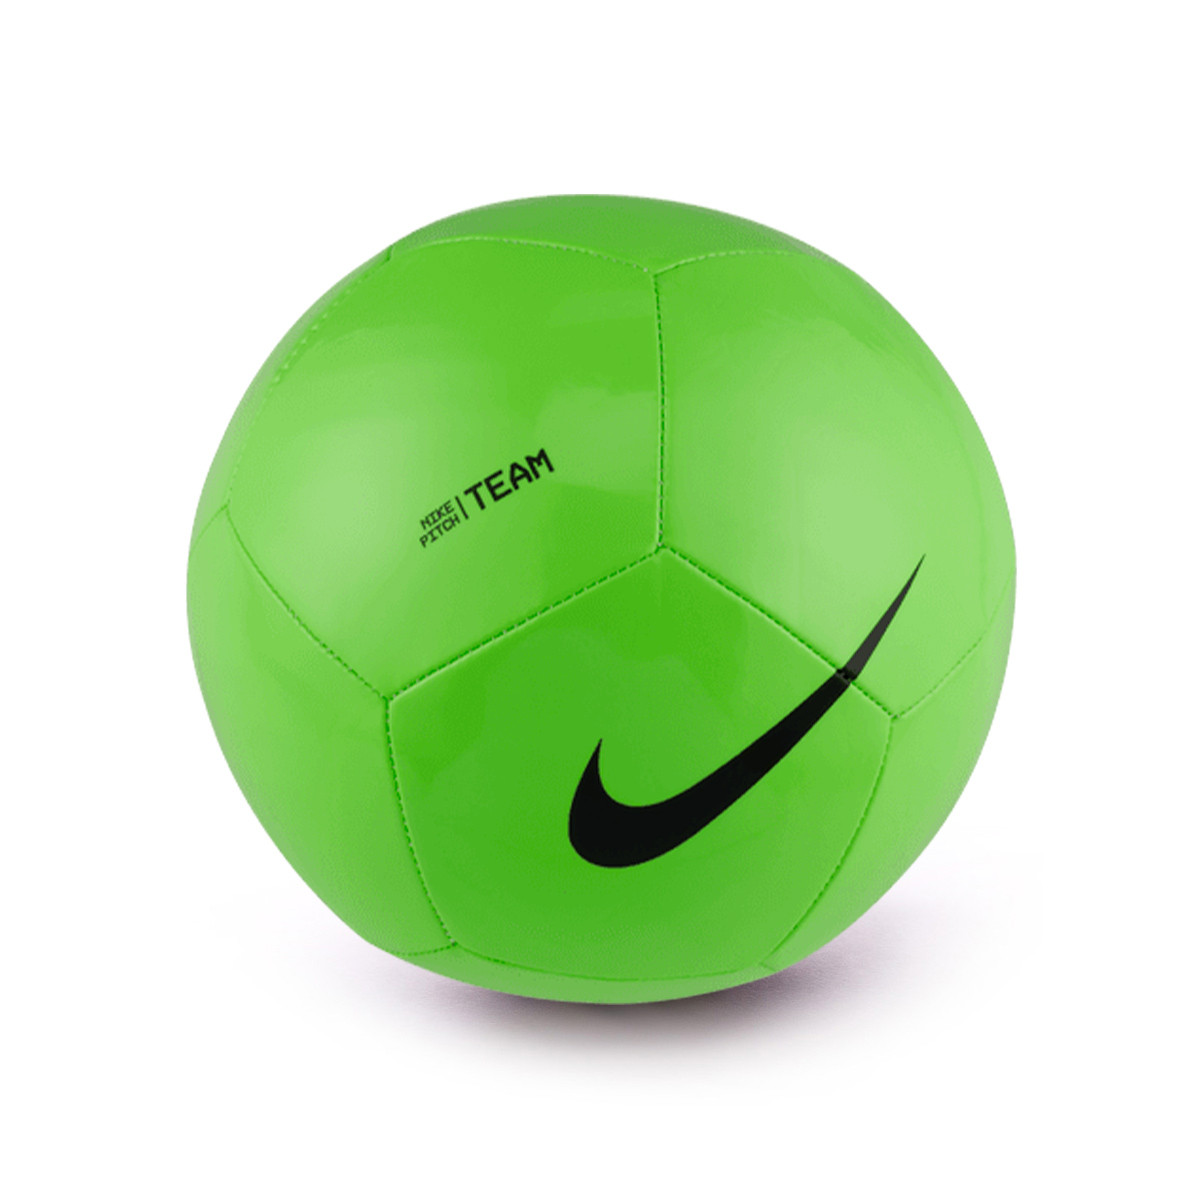 Balón Nike Pitch Team Electric Green-Black - Emotion